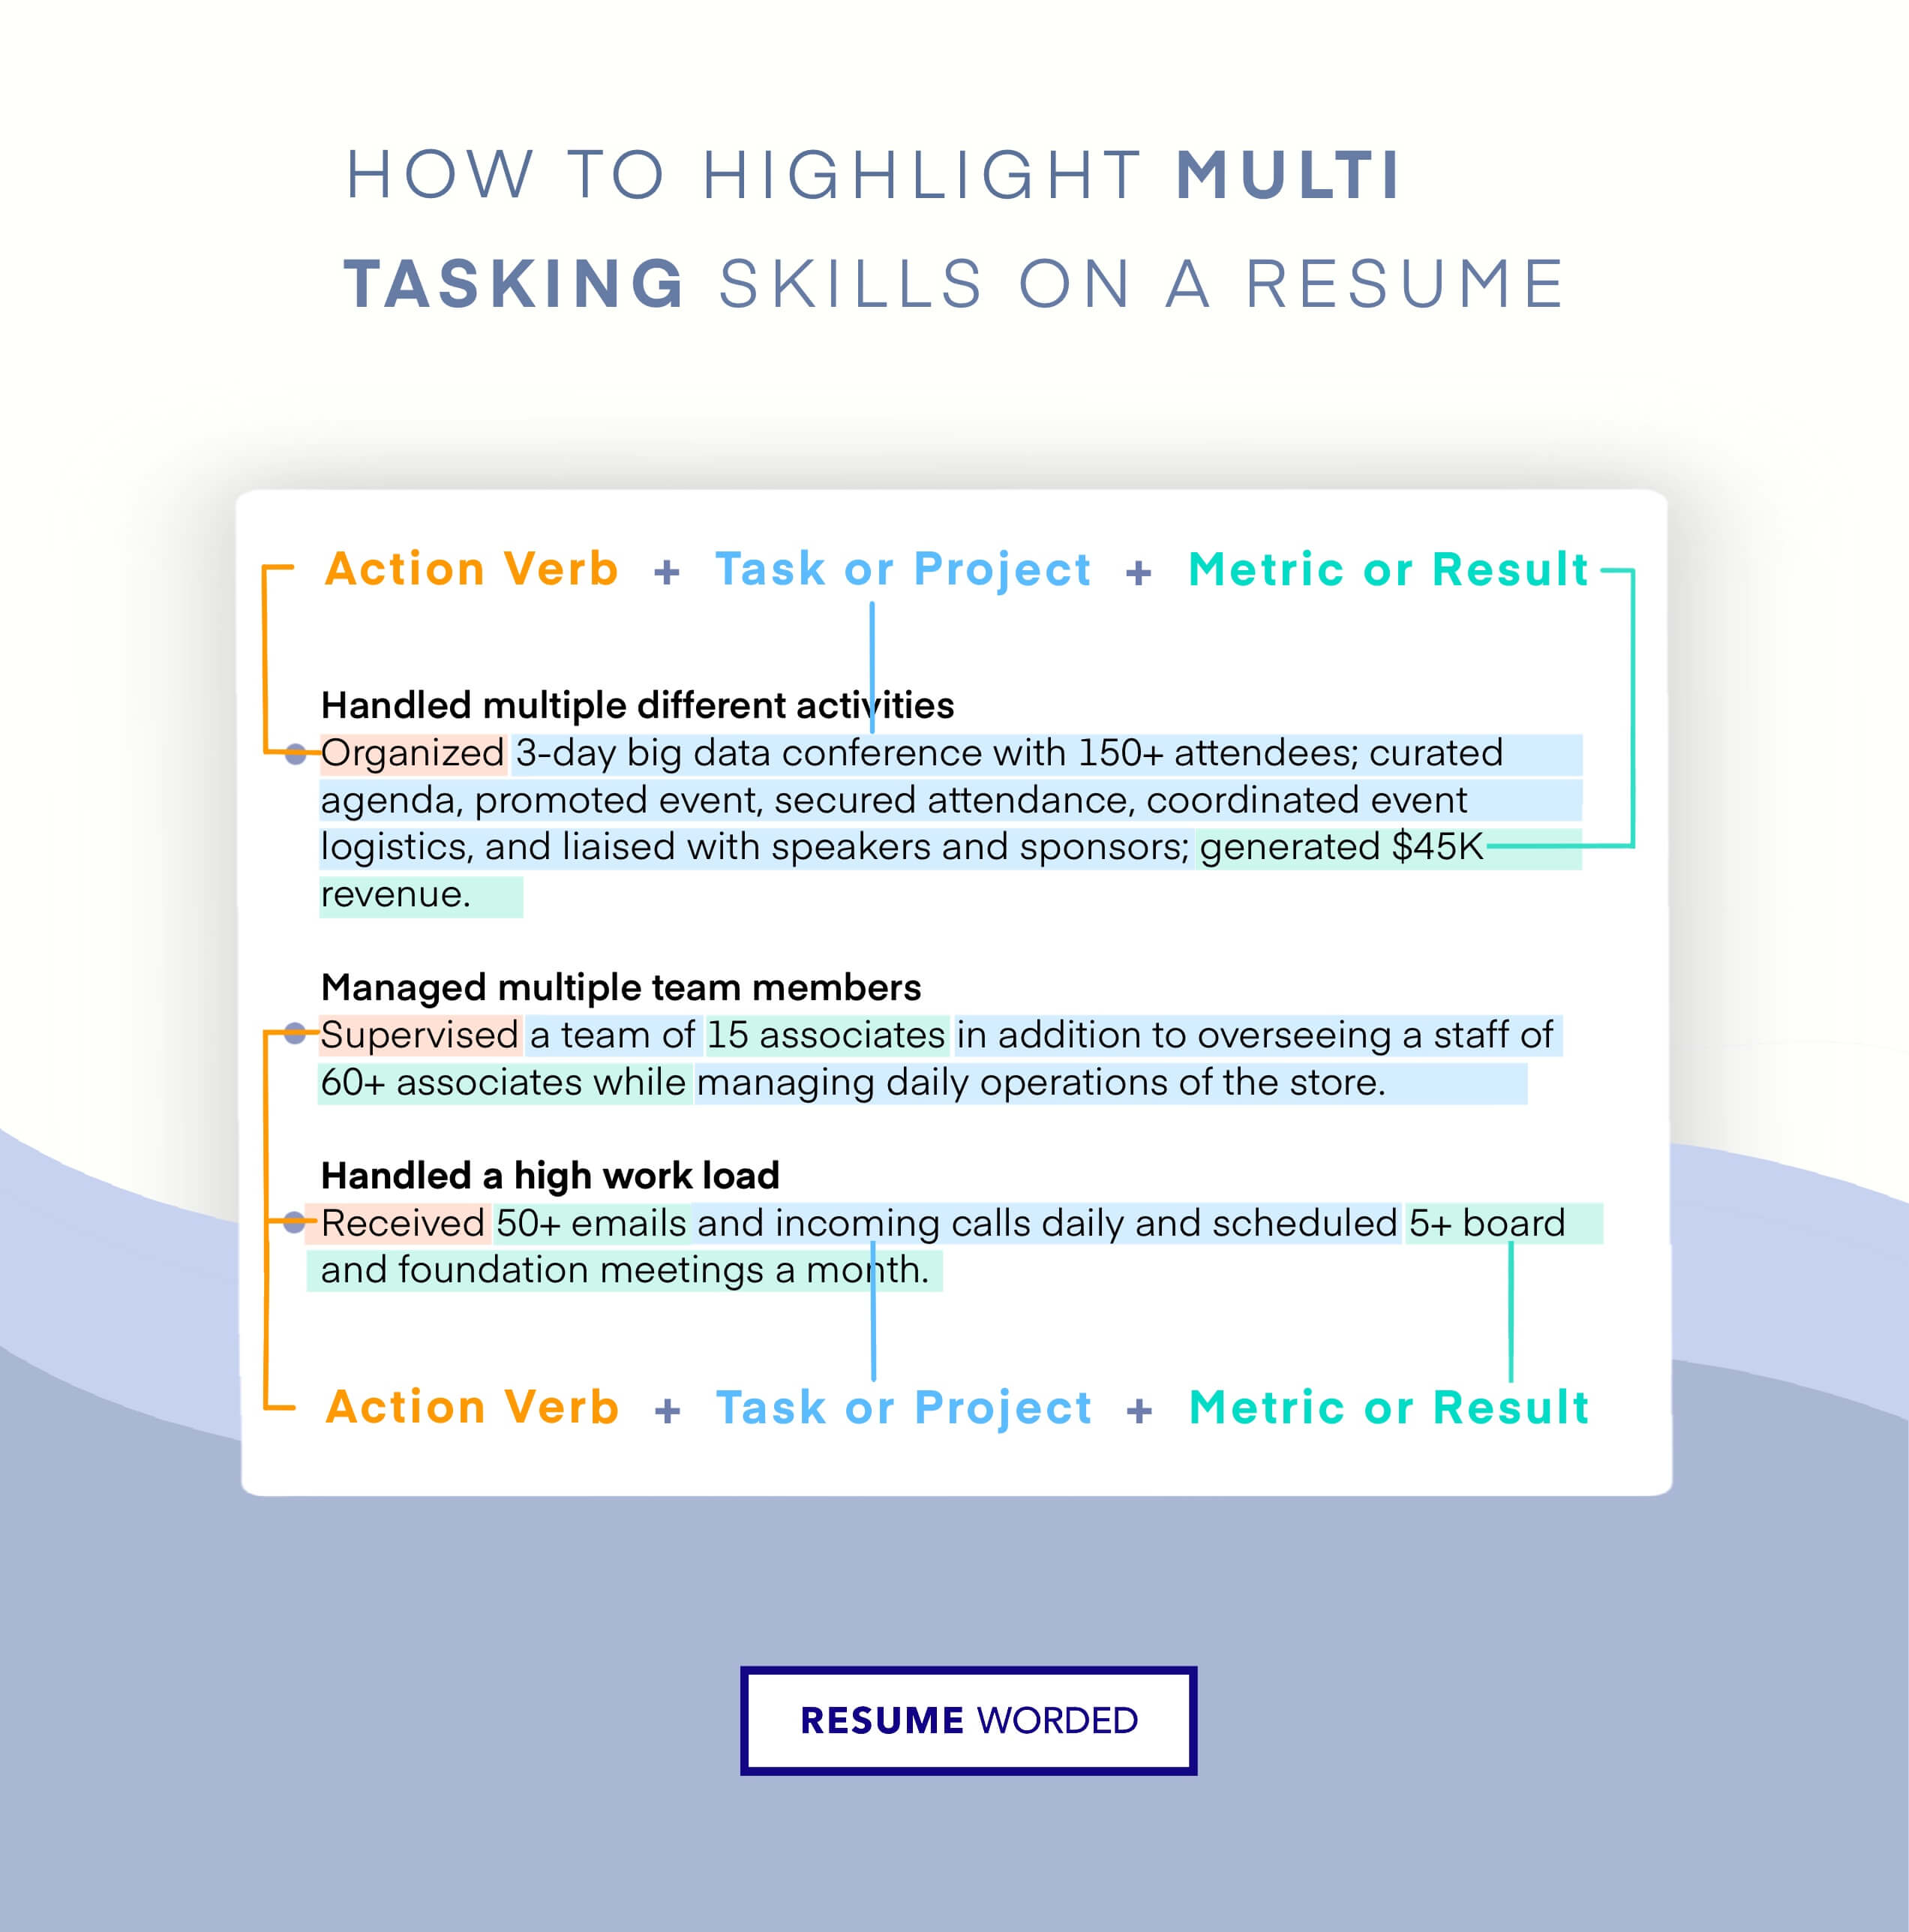 Showcase your multitasking ability - Back Office Manager CV